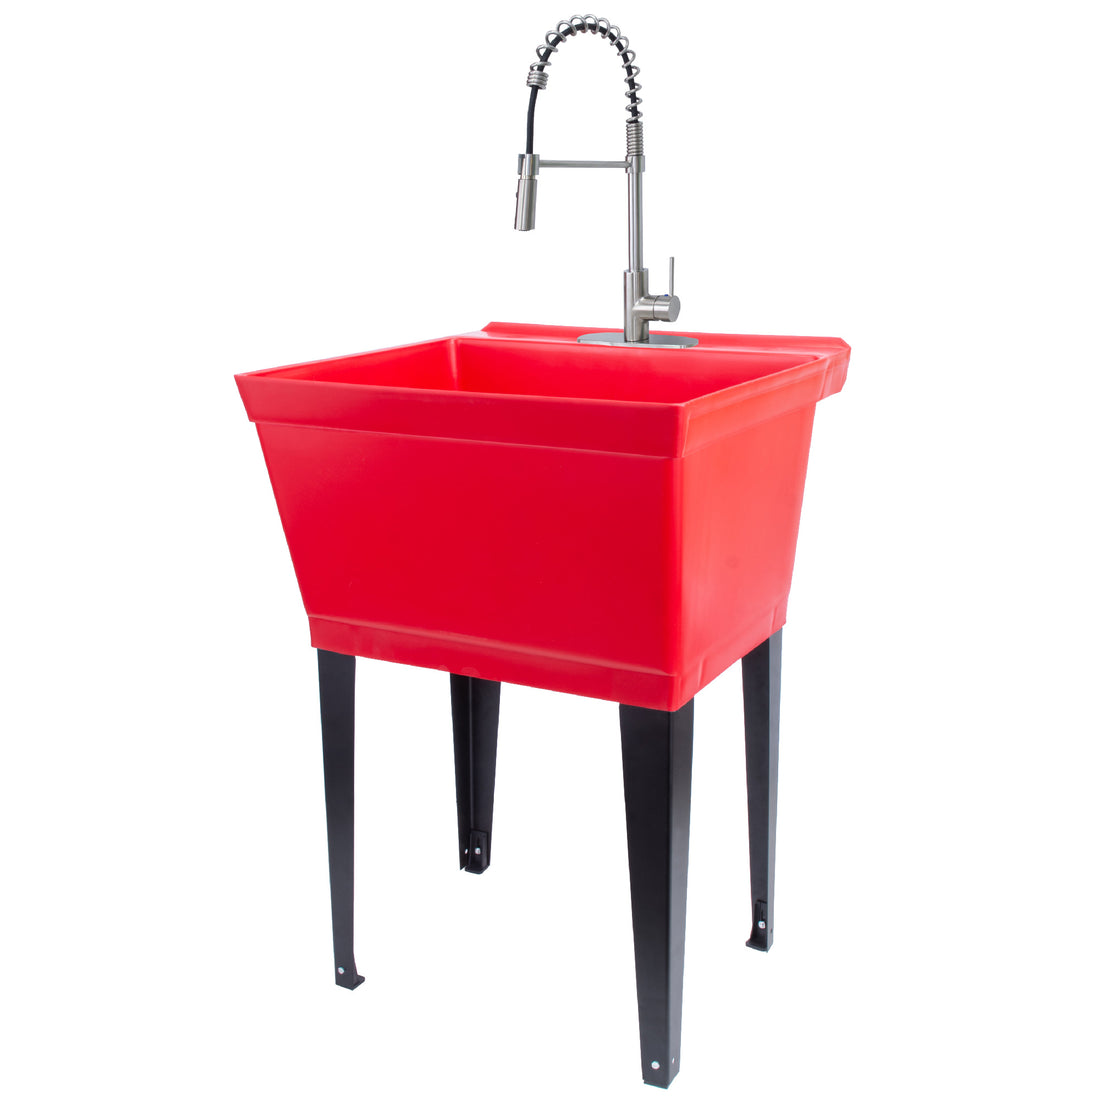 Tehila Standard Freestanding Red Utility Sink with Stainless Steel Finish High-Arc Coil Pull-Down Faucet - Utility sinks vanites Tehila